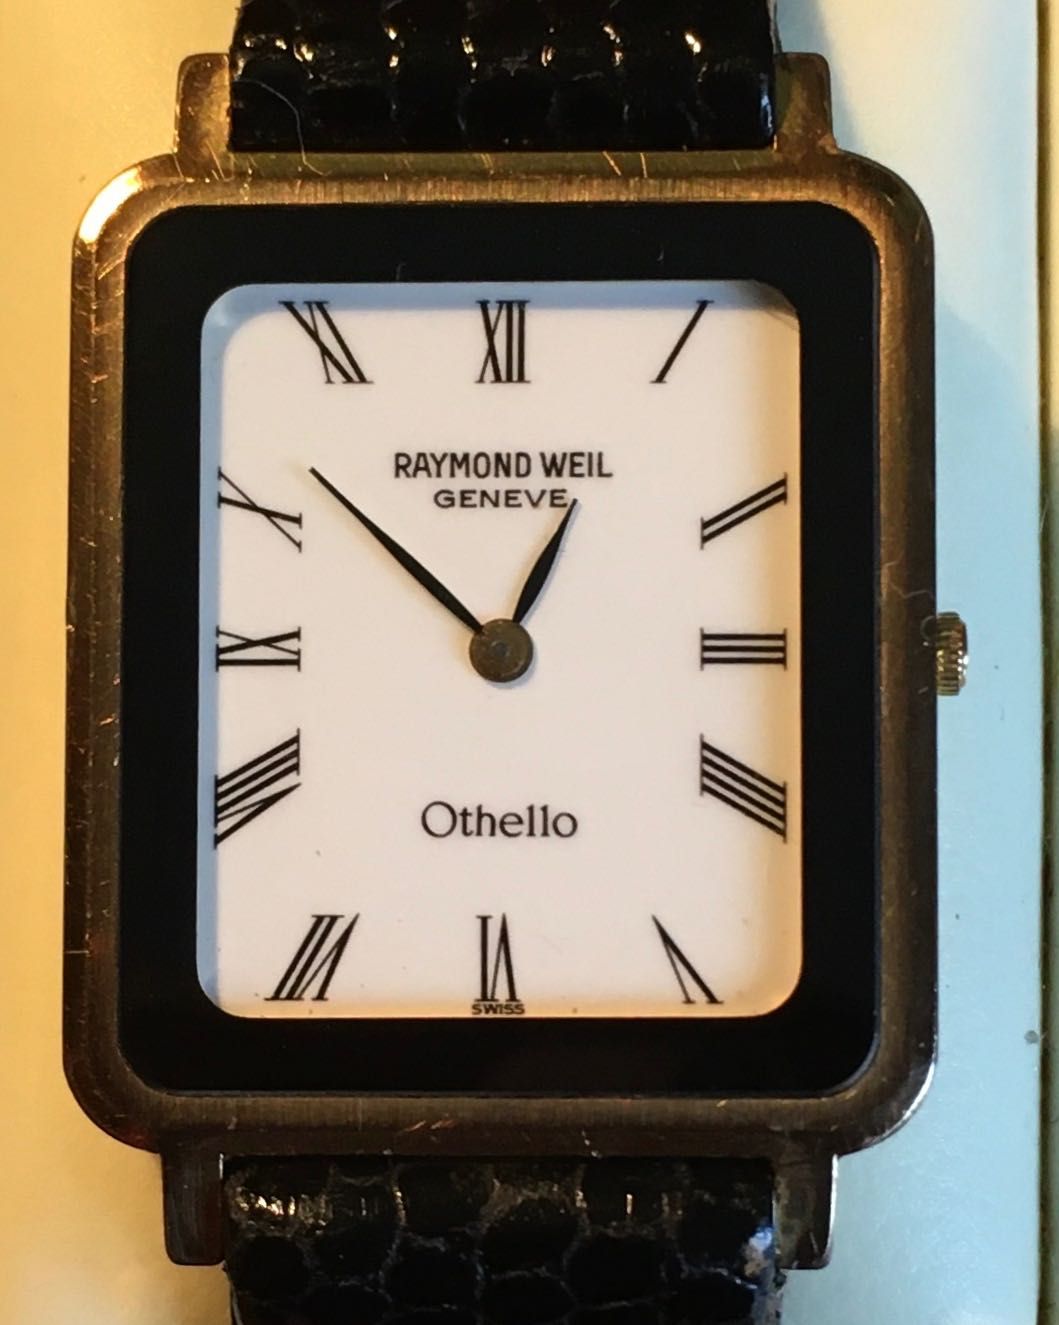 RAYMOND WEIL - Othello - relógio de pulso - Geneve